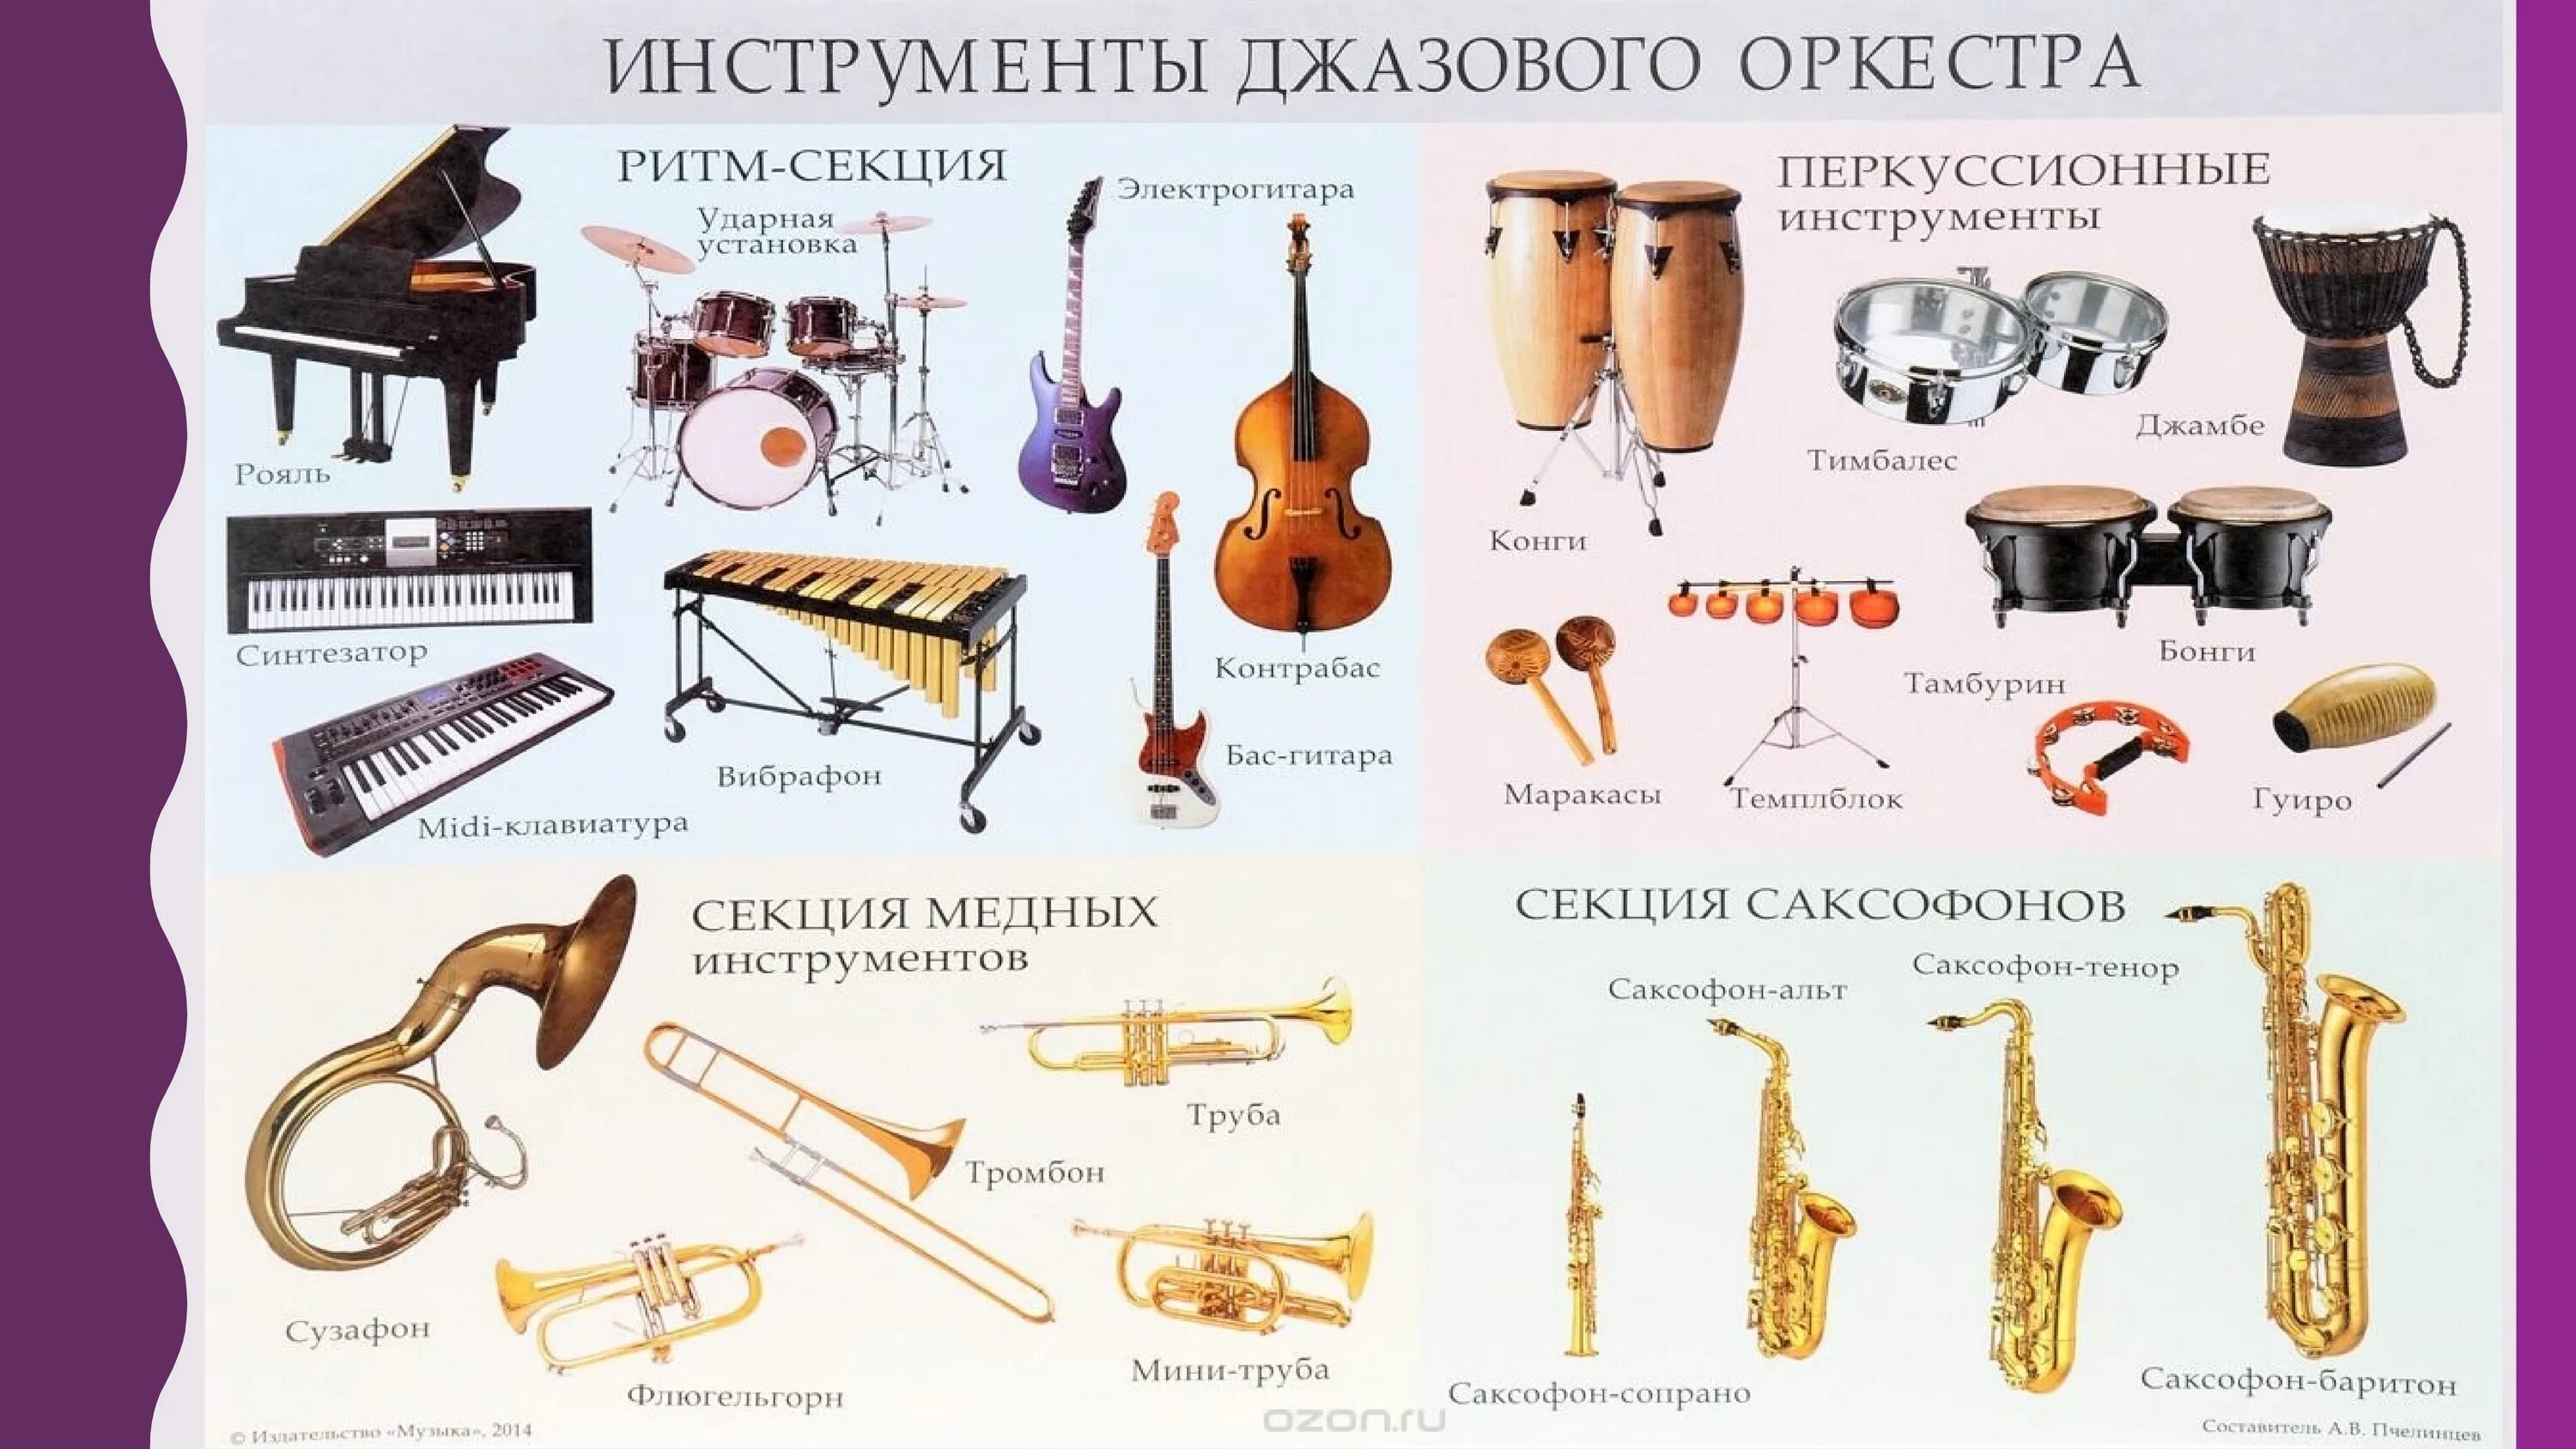 Музыкальные инструменты музыка 1 класс презентация. Джазовые музыкальные инструменты. Музыкальные инструменты оркестра. Инструменты джаз оркестра. Инструменты по Музыке.